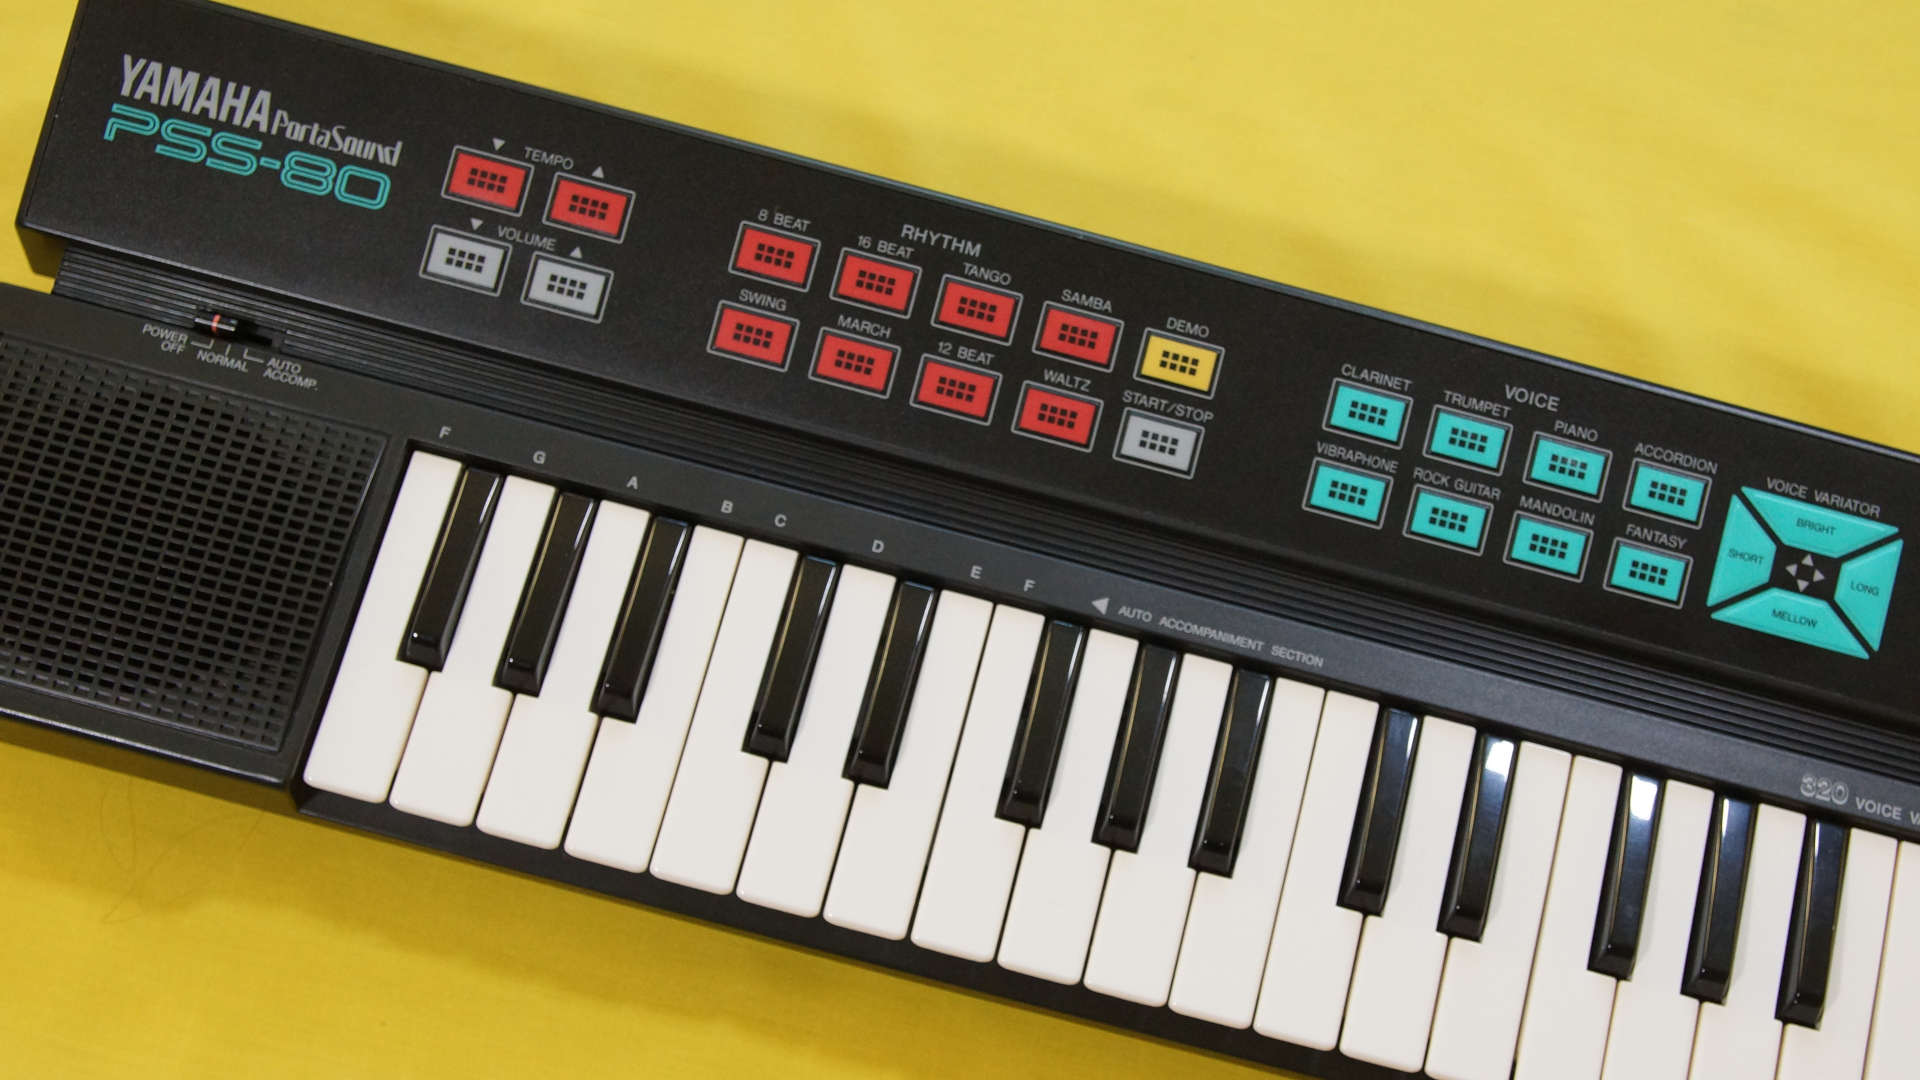 Yamaha PSS-80 keyboard